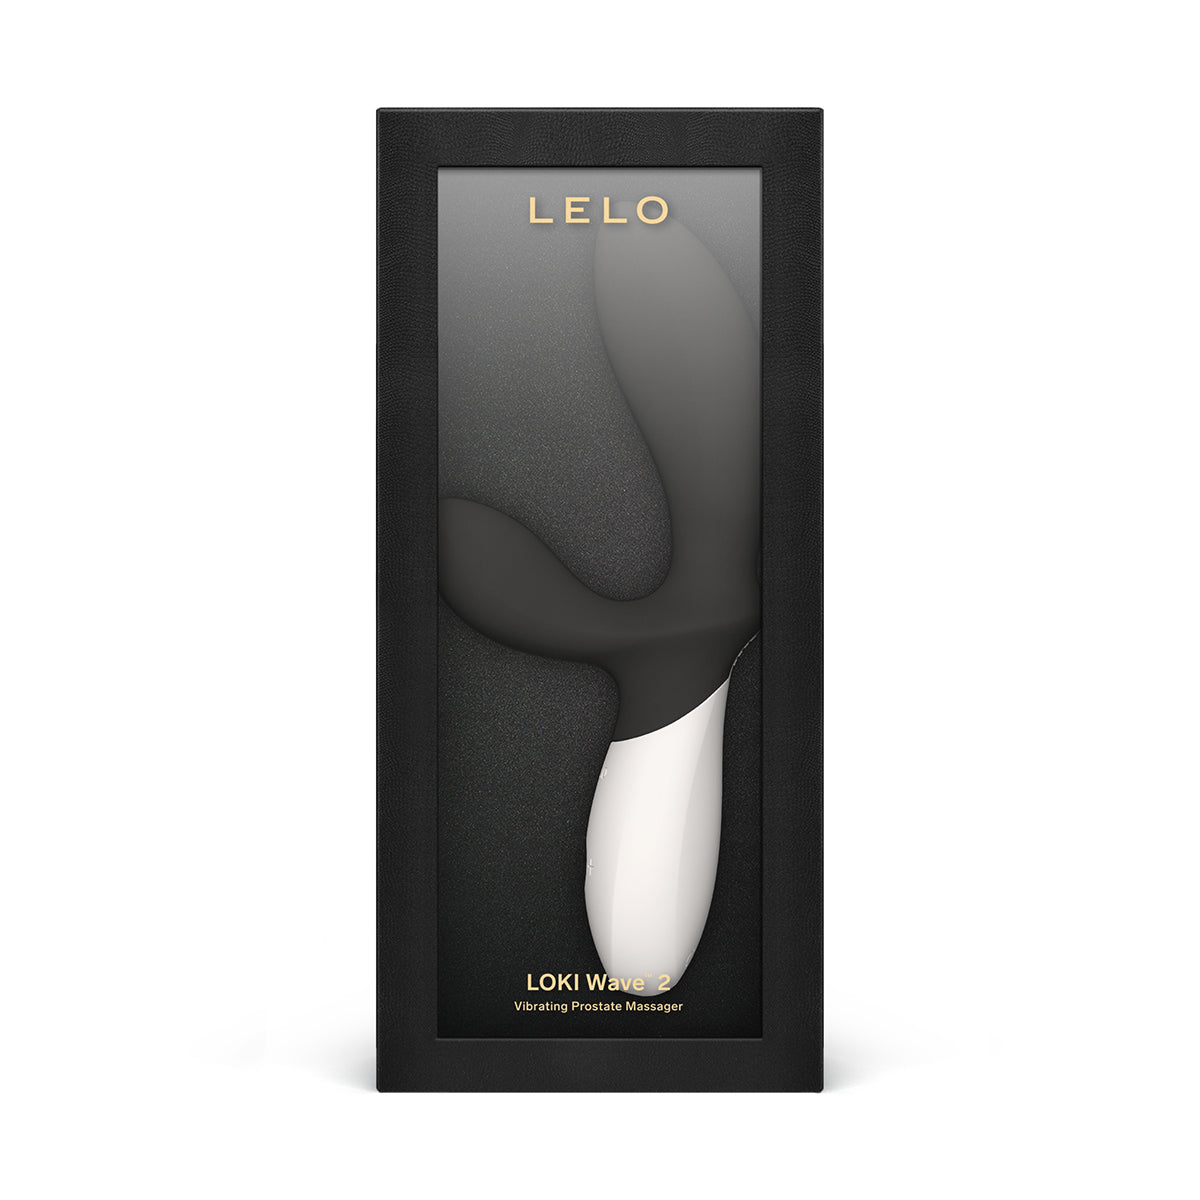 LELO Loki Wave 2 - Black